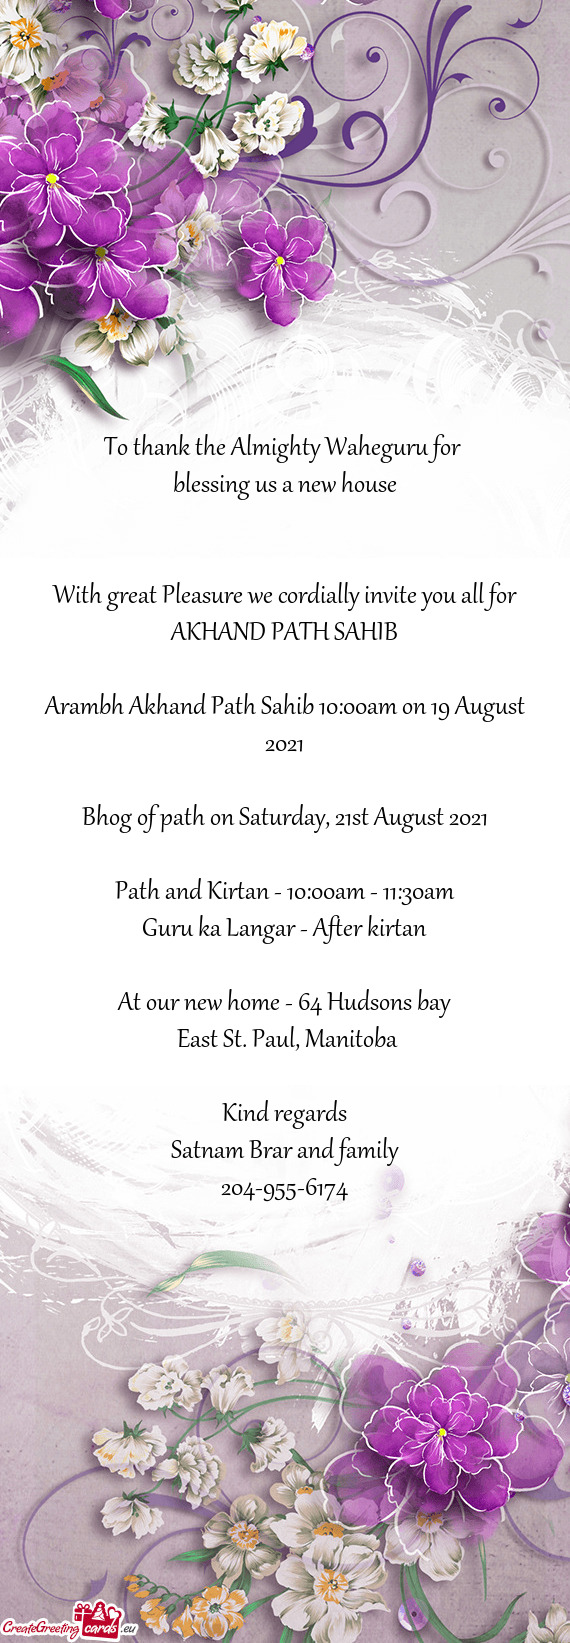 Arambh Akhand Path Sahib 10:00am on 19 August 2021